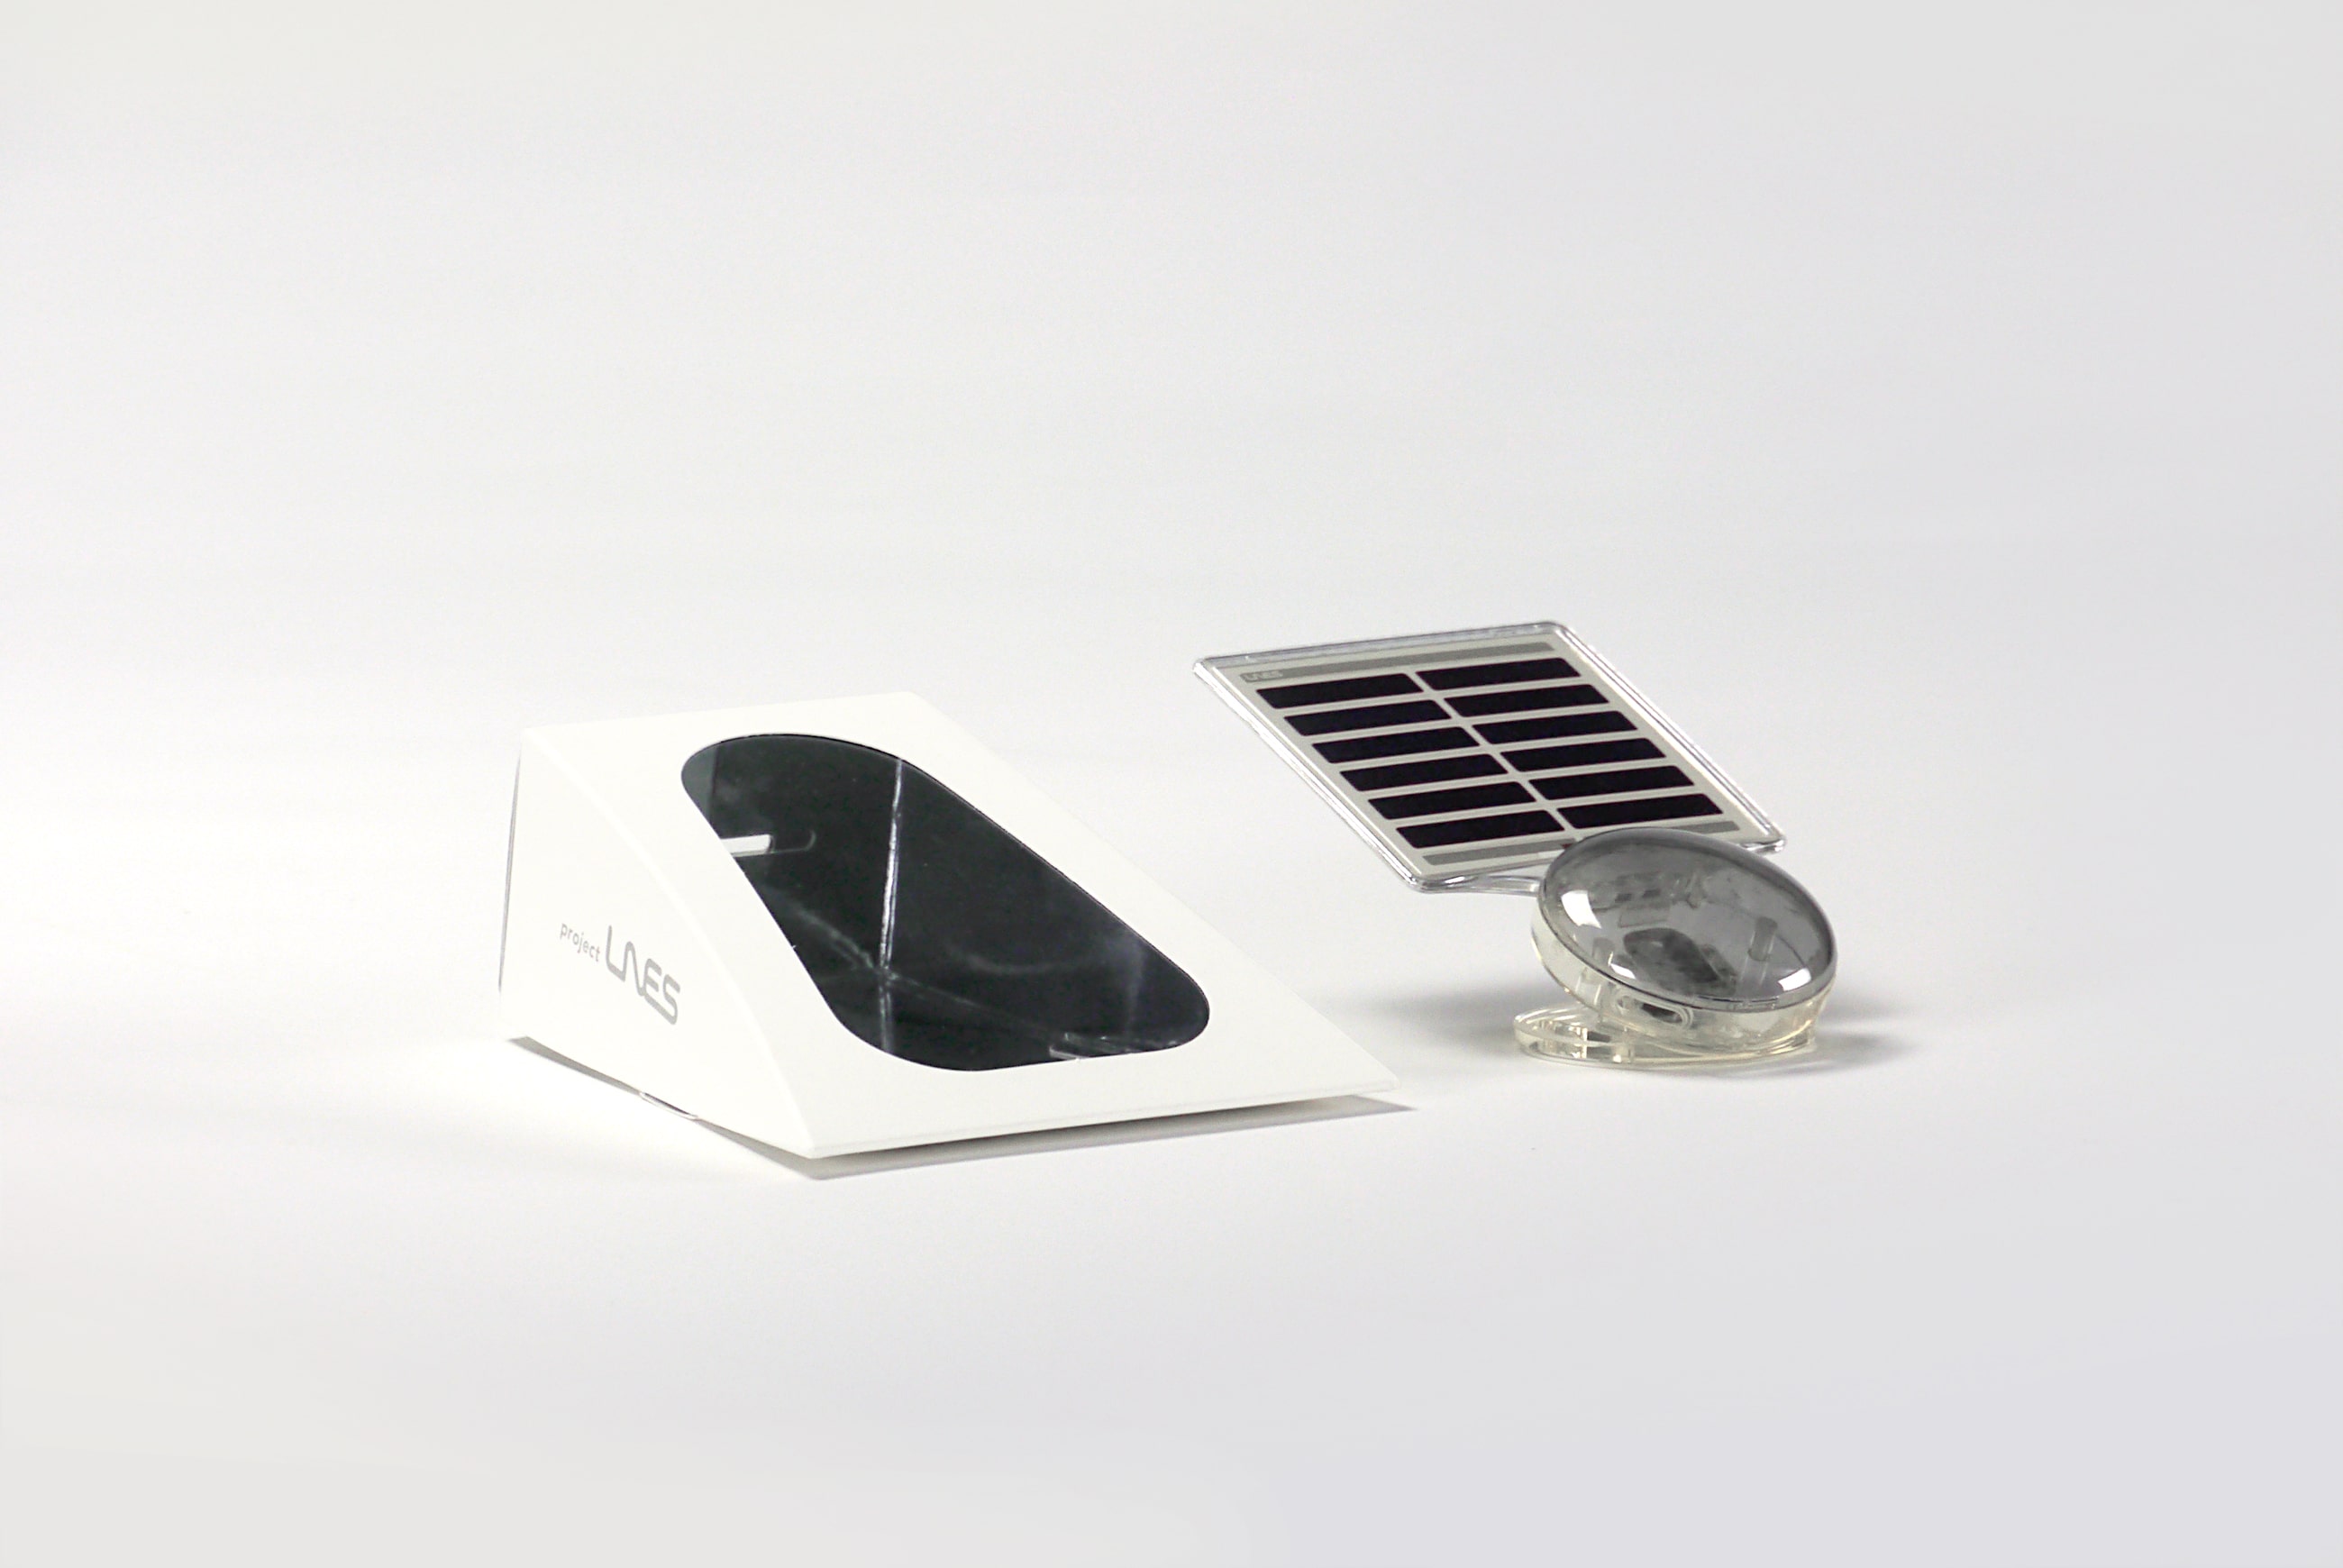 LNES SL-01 SOLAR CARD design device